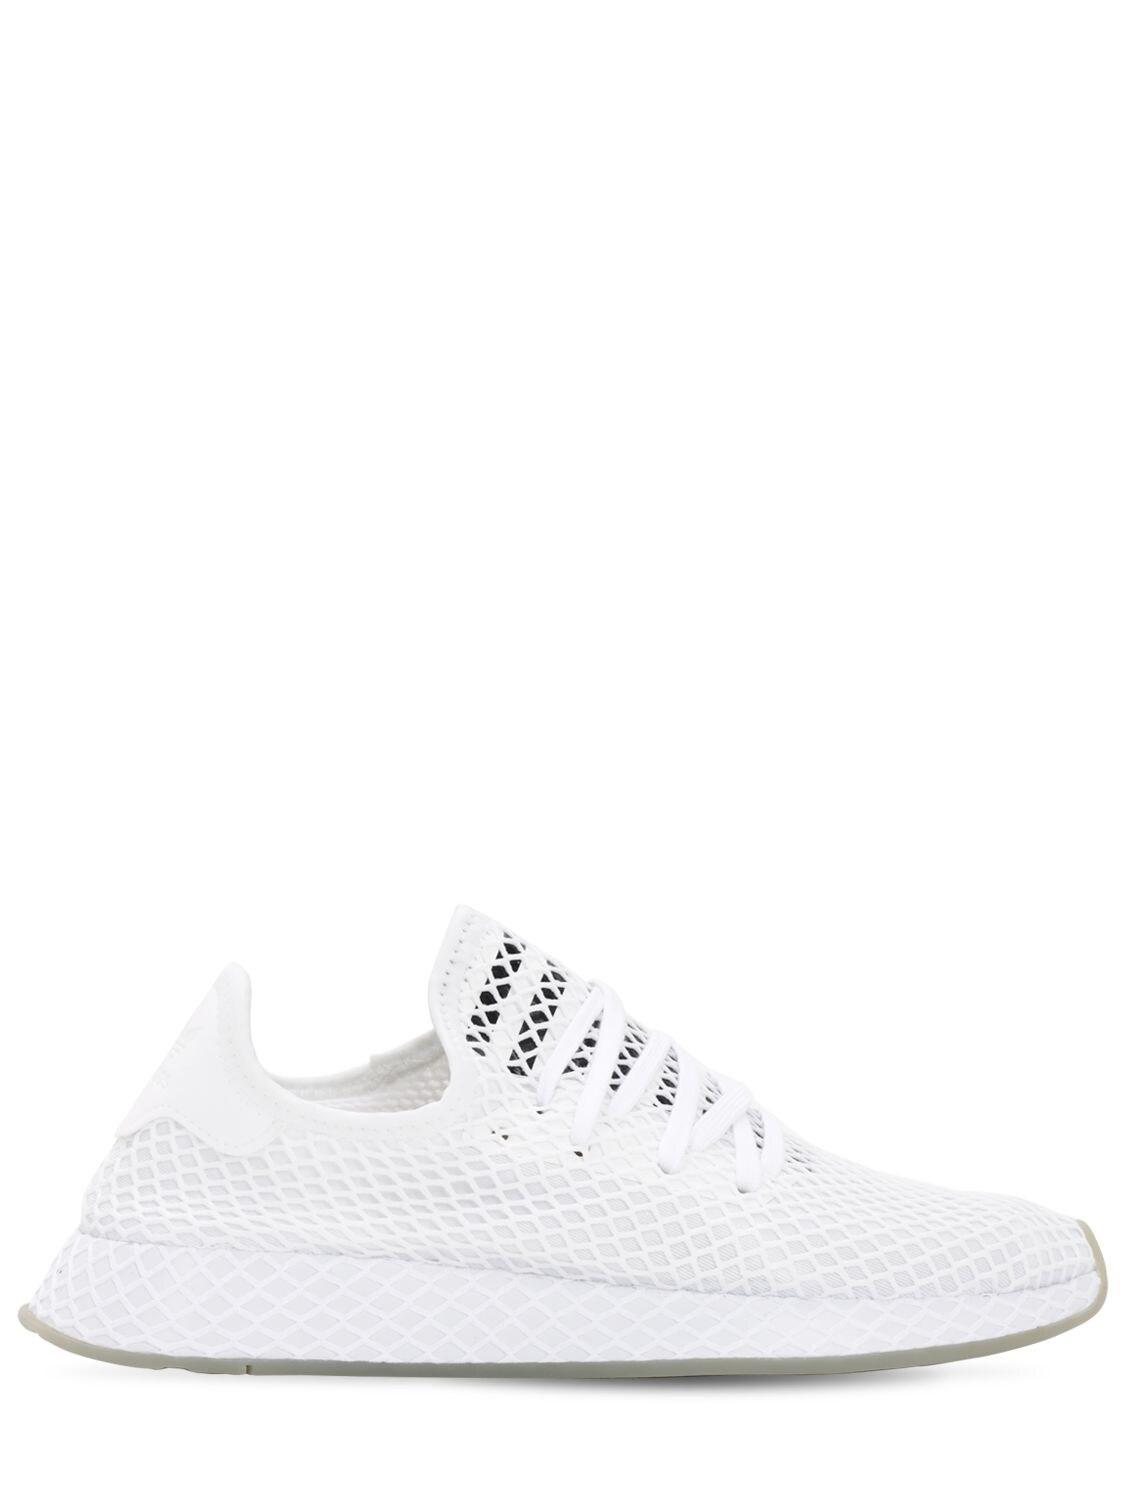 adidas Originals Deerupt Mesh Socks Sneakers in White - Lyst